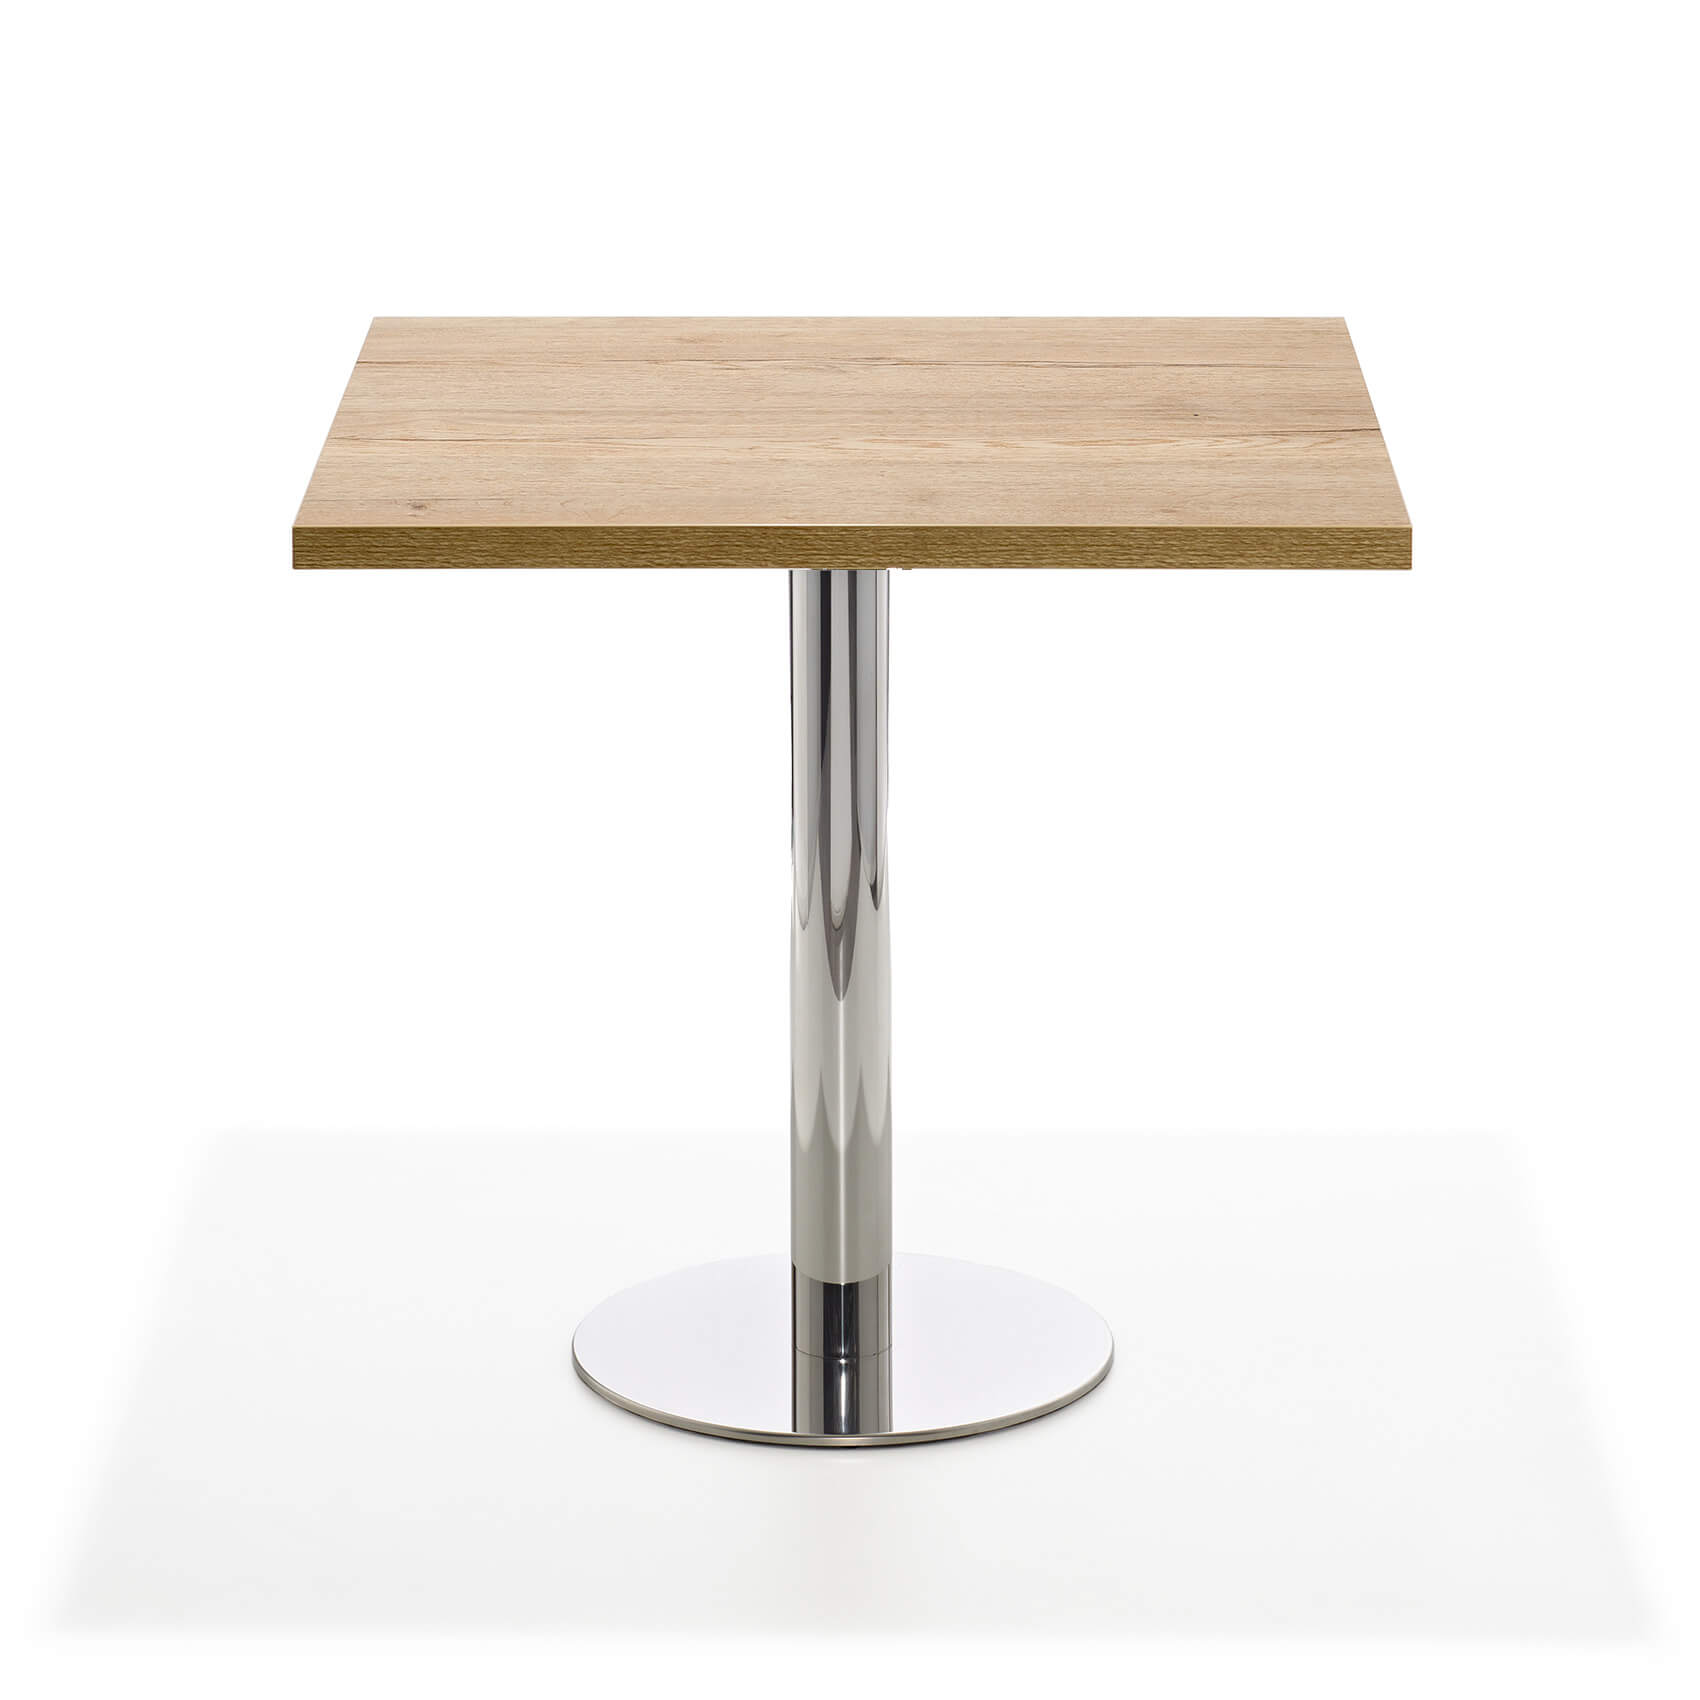 Enzo seating table KS 80 x 80 cm oak